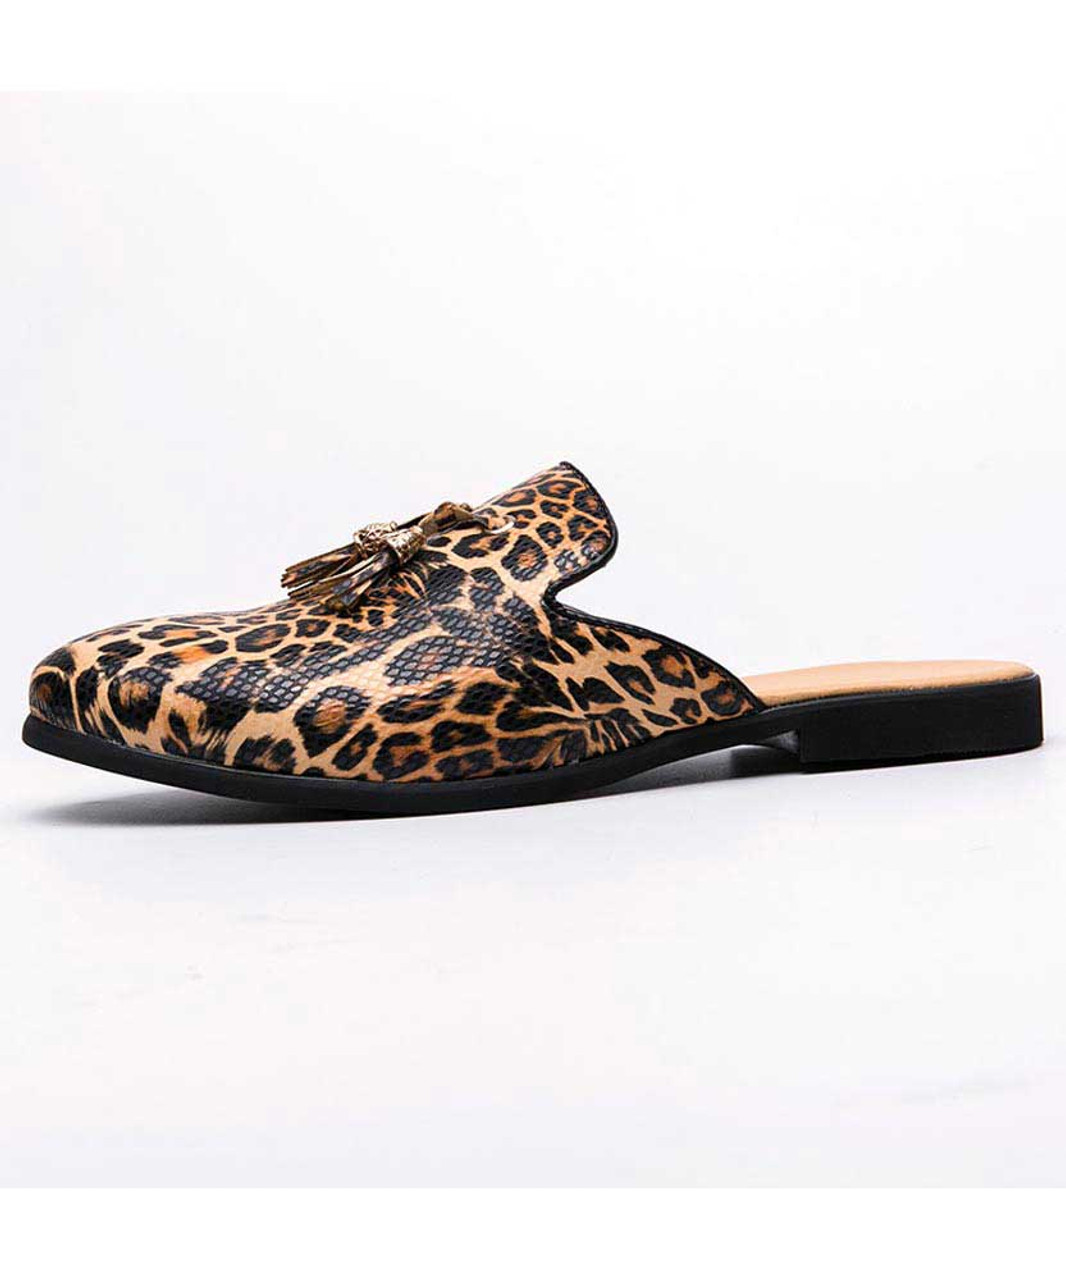 Leopard pattern print tassel slip on half shoe loafer | Mens shoe ...